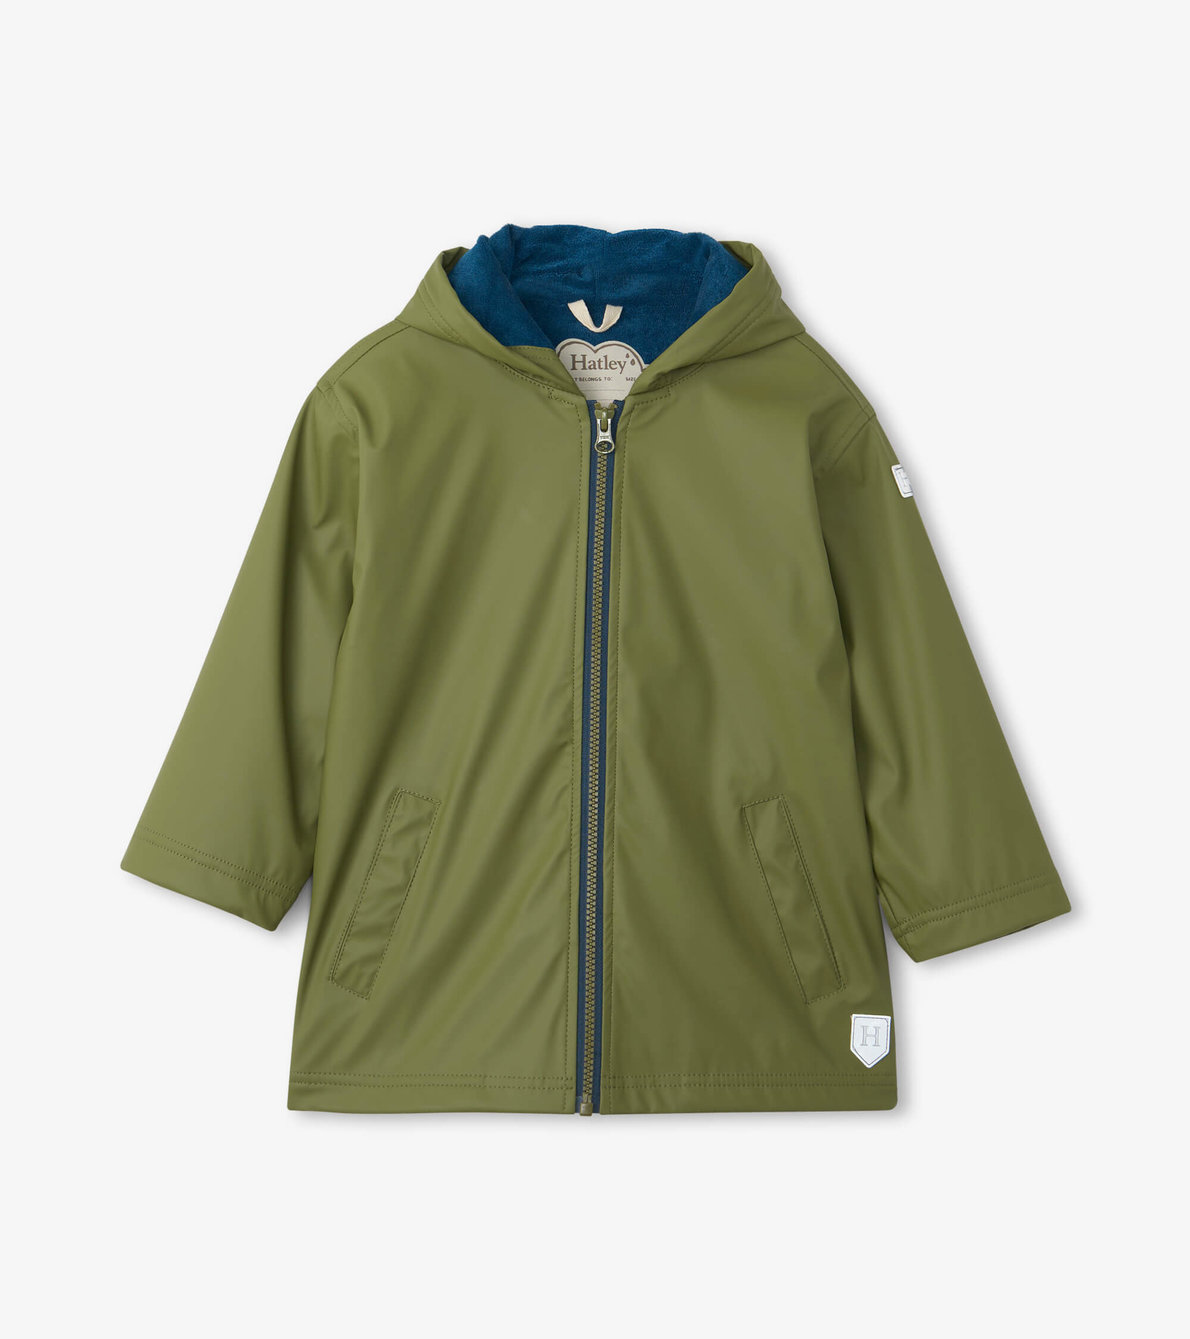 View larger image of Forest Green Zip Up Splash Jacket